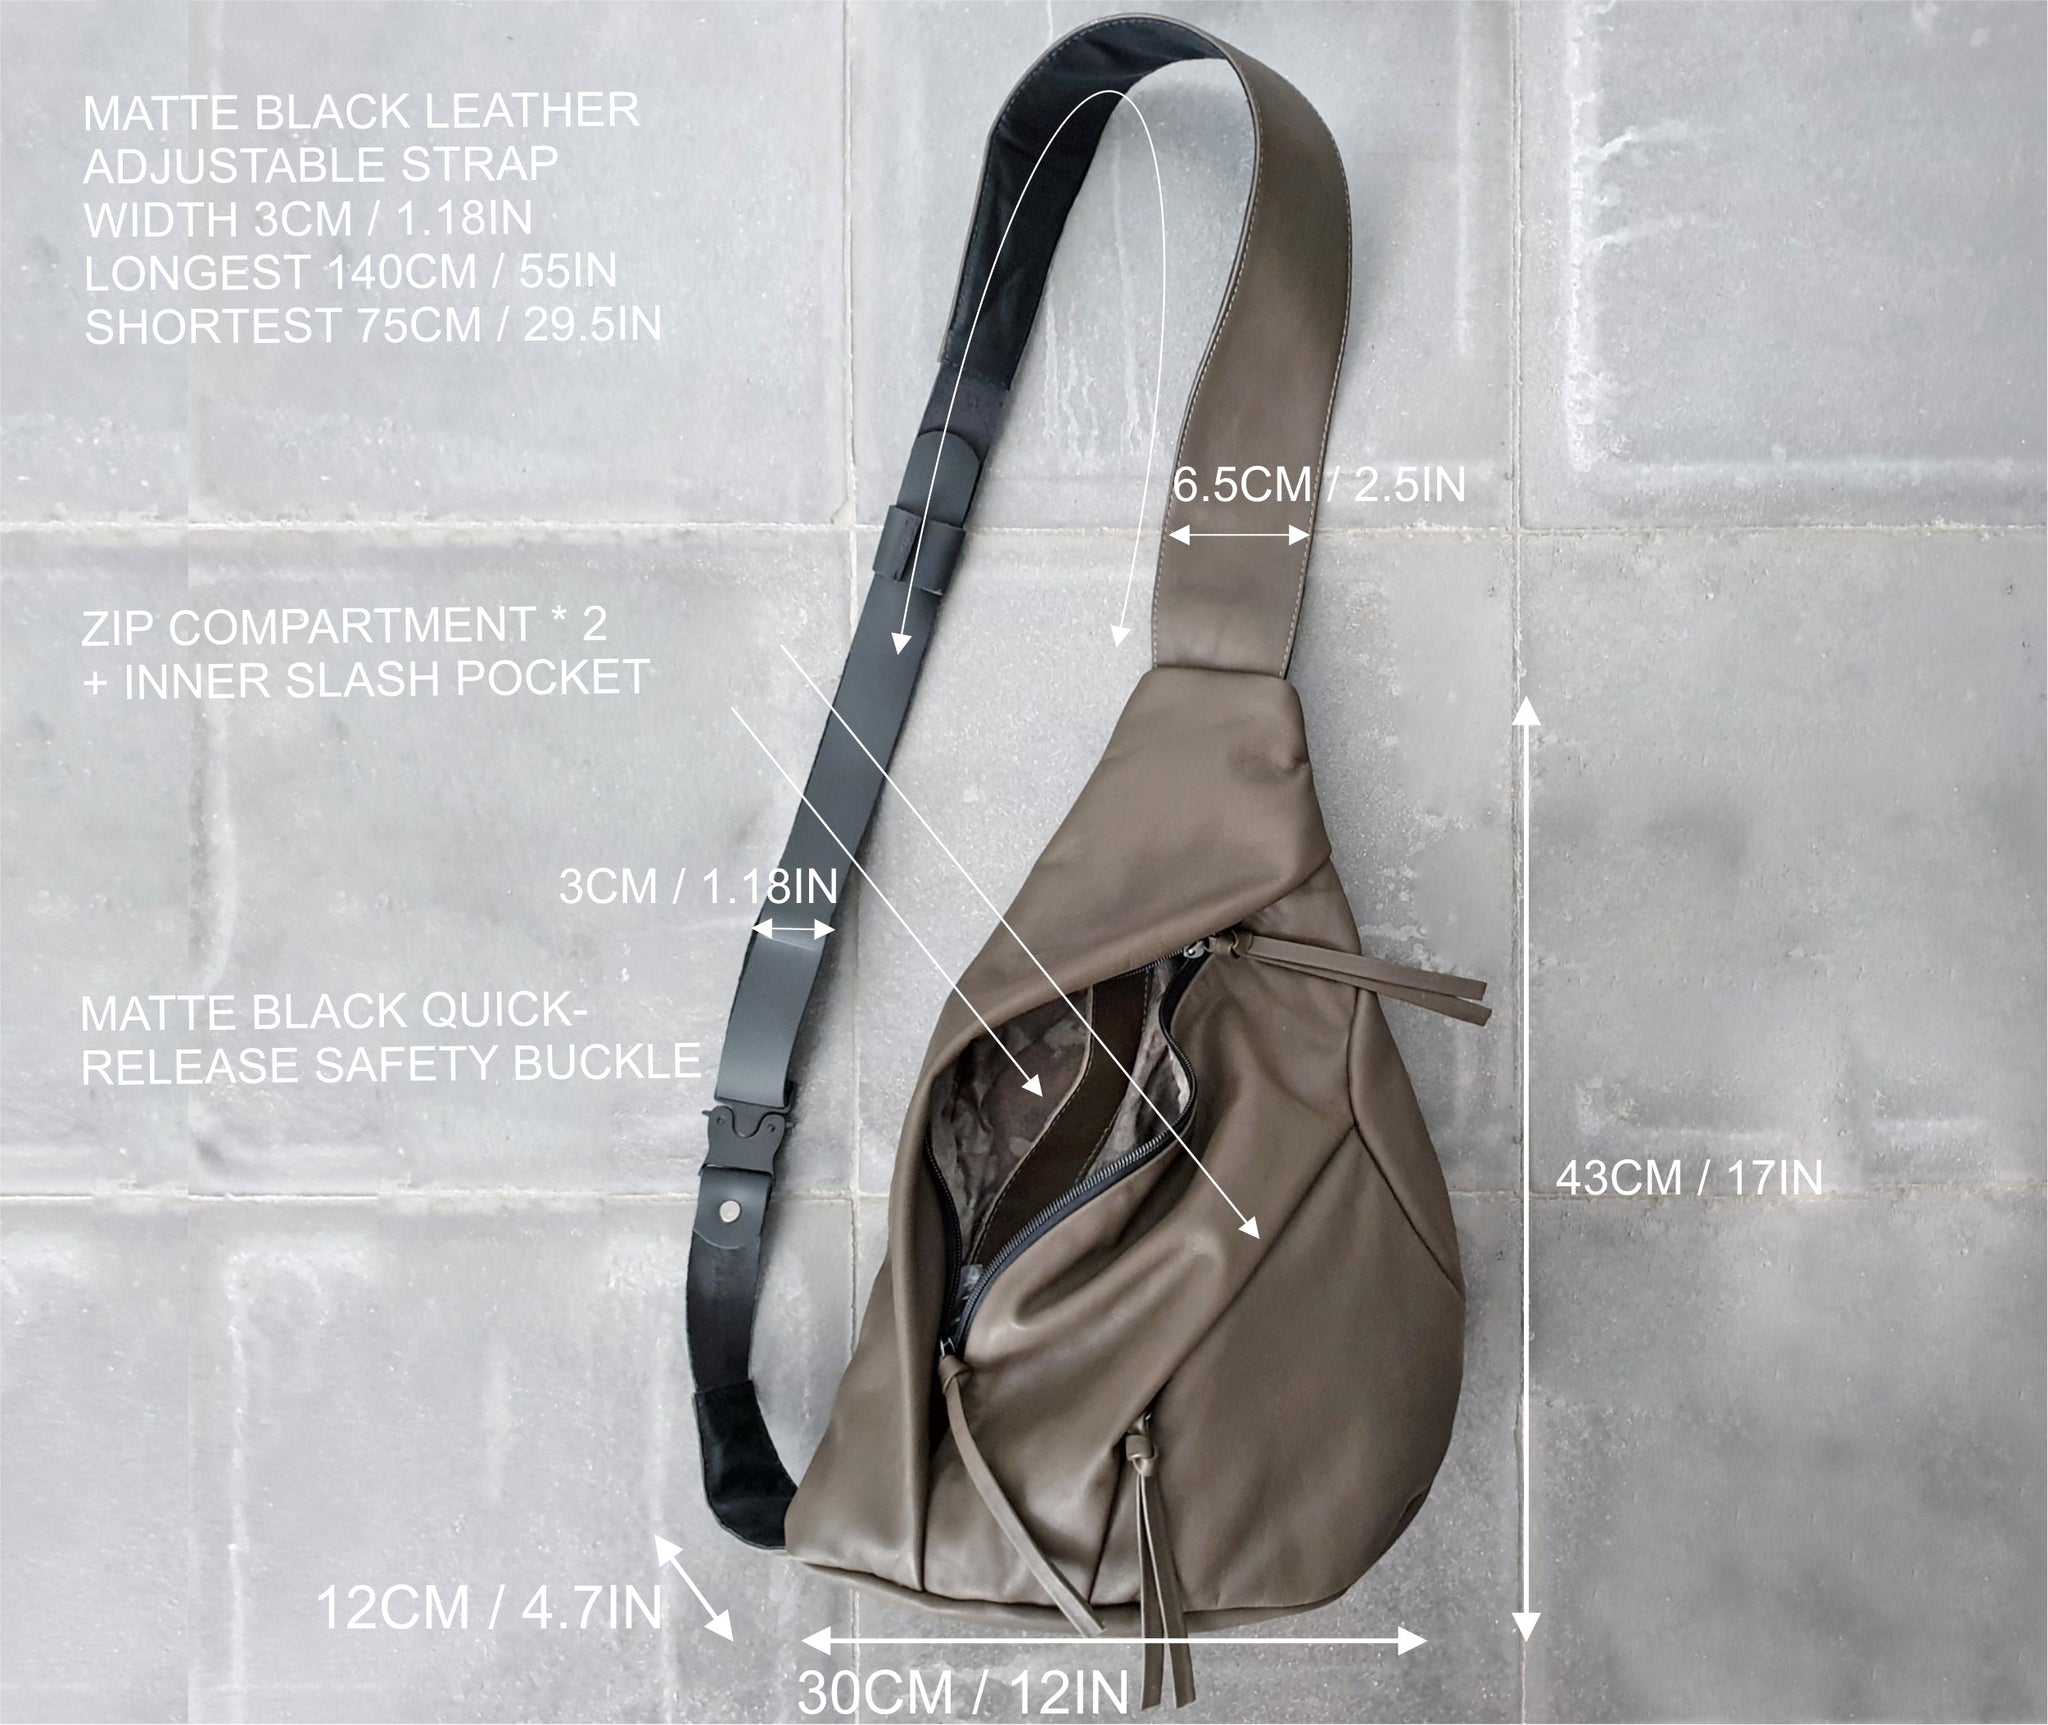 Lavie Onora Women's Sling Bag (Olive)